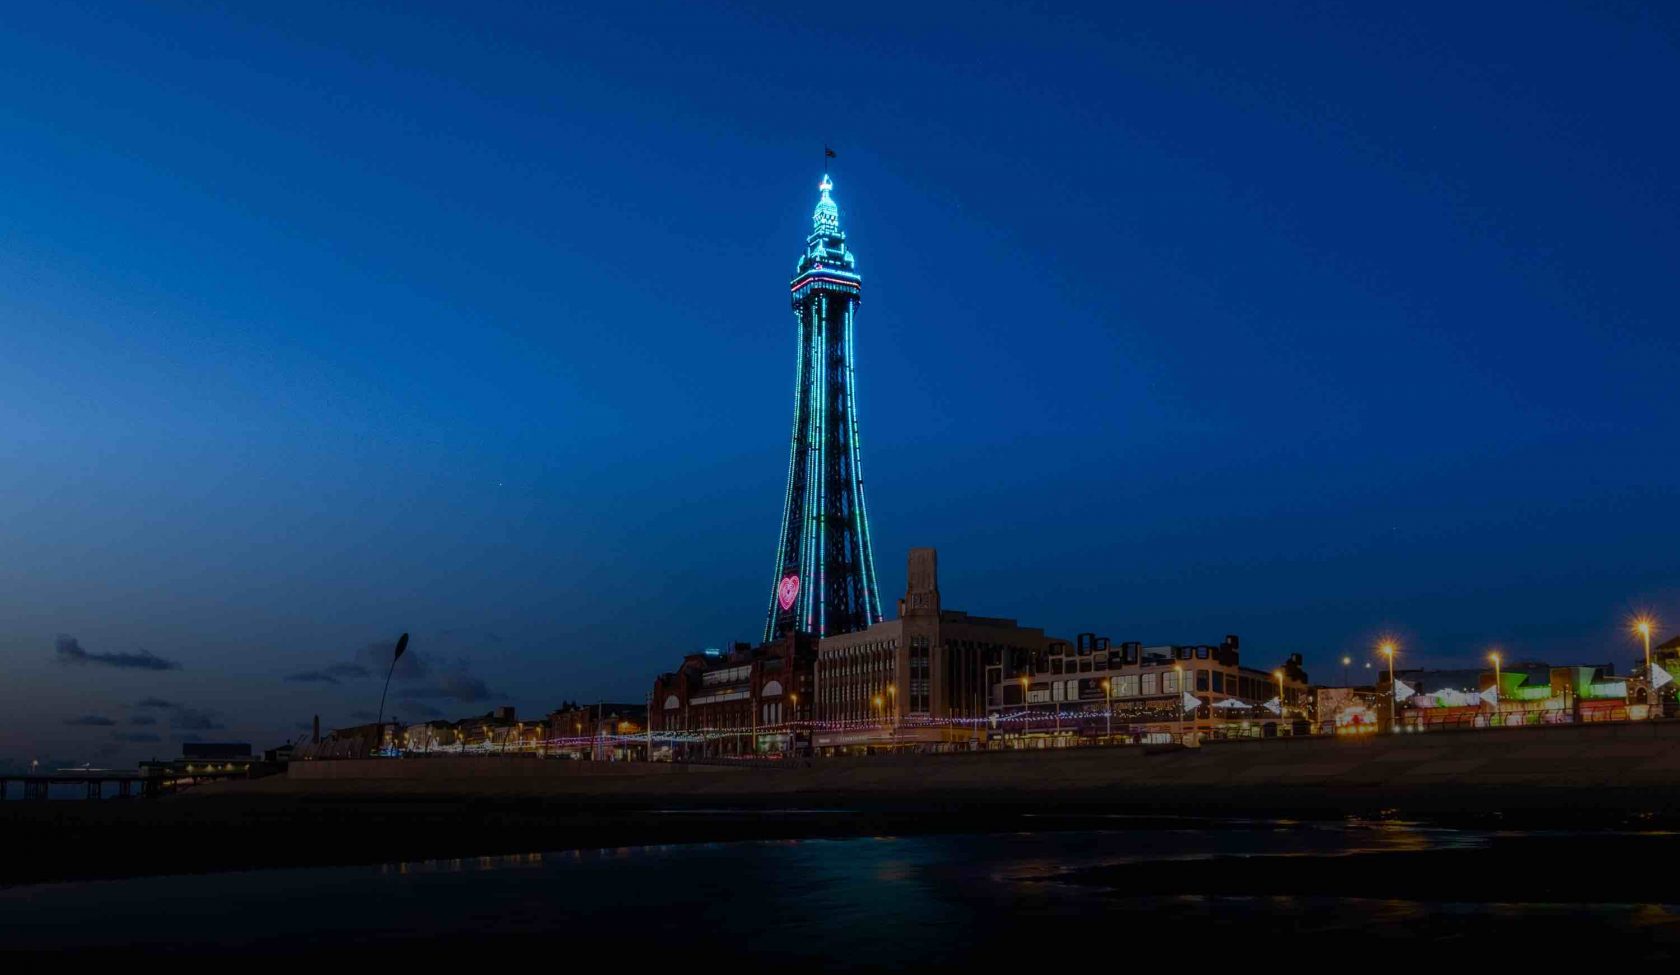 Blackpool Tower and Ballrooms